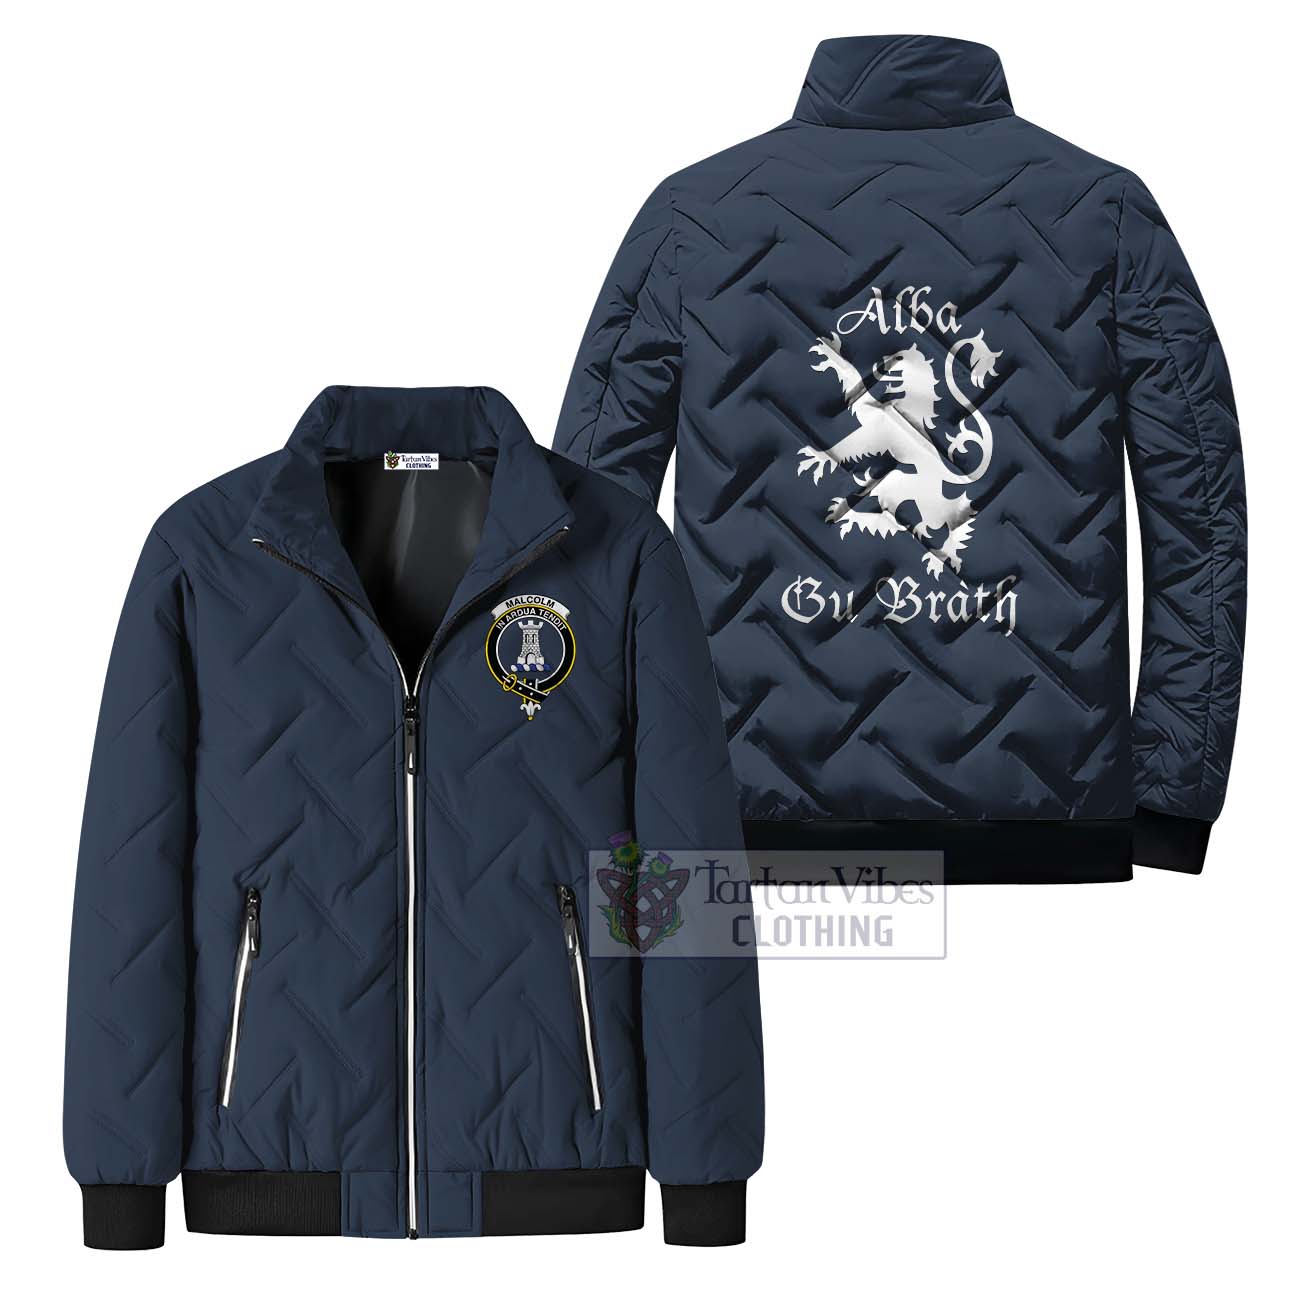 Tartan Vibes Clothing Malcolm Family Crest Padded Cotton Jacket Lion Rampant Alba Gu Brath Style